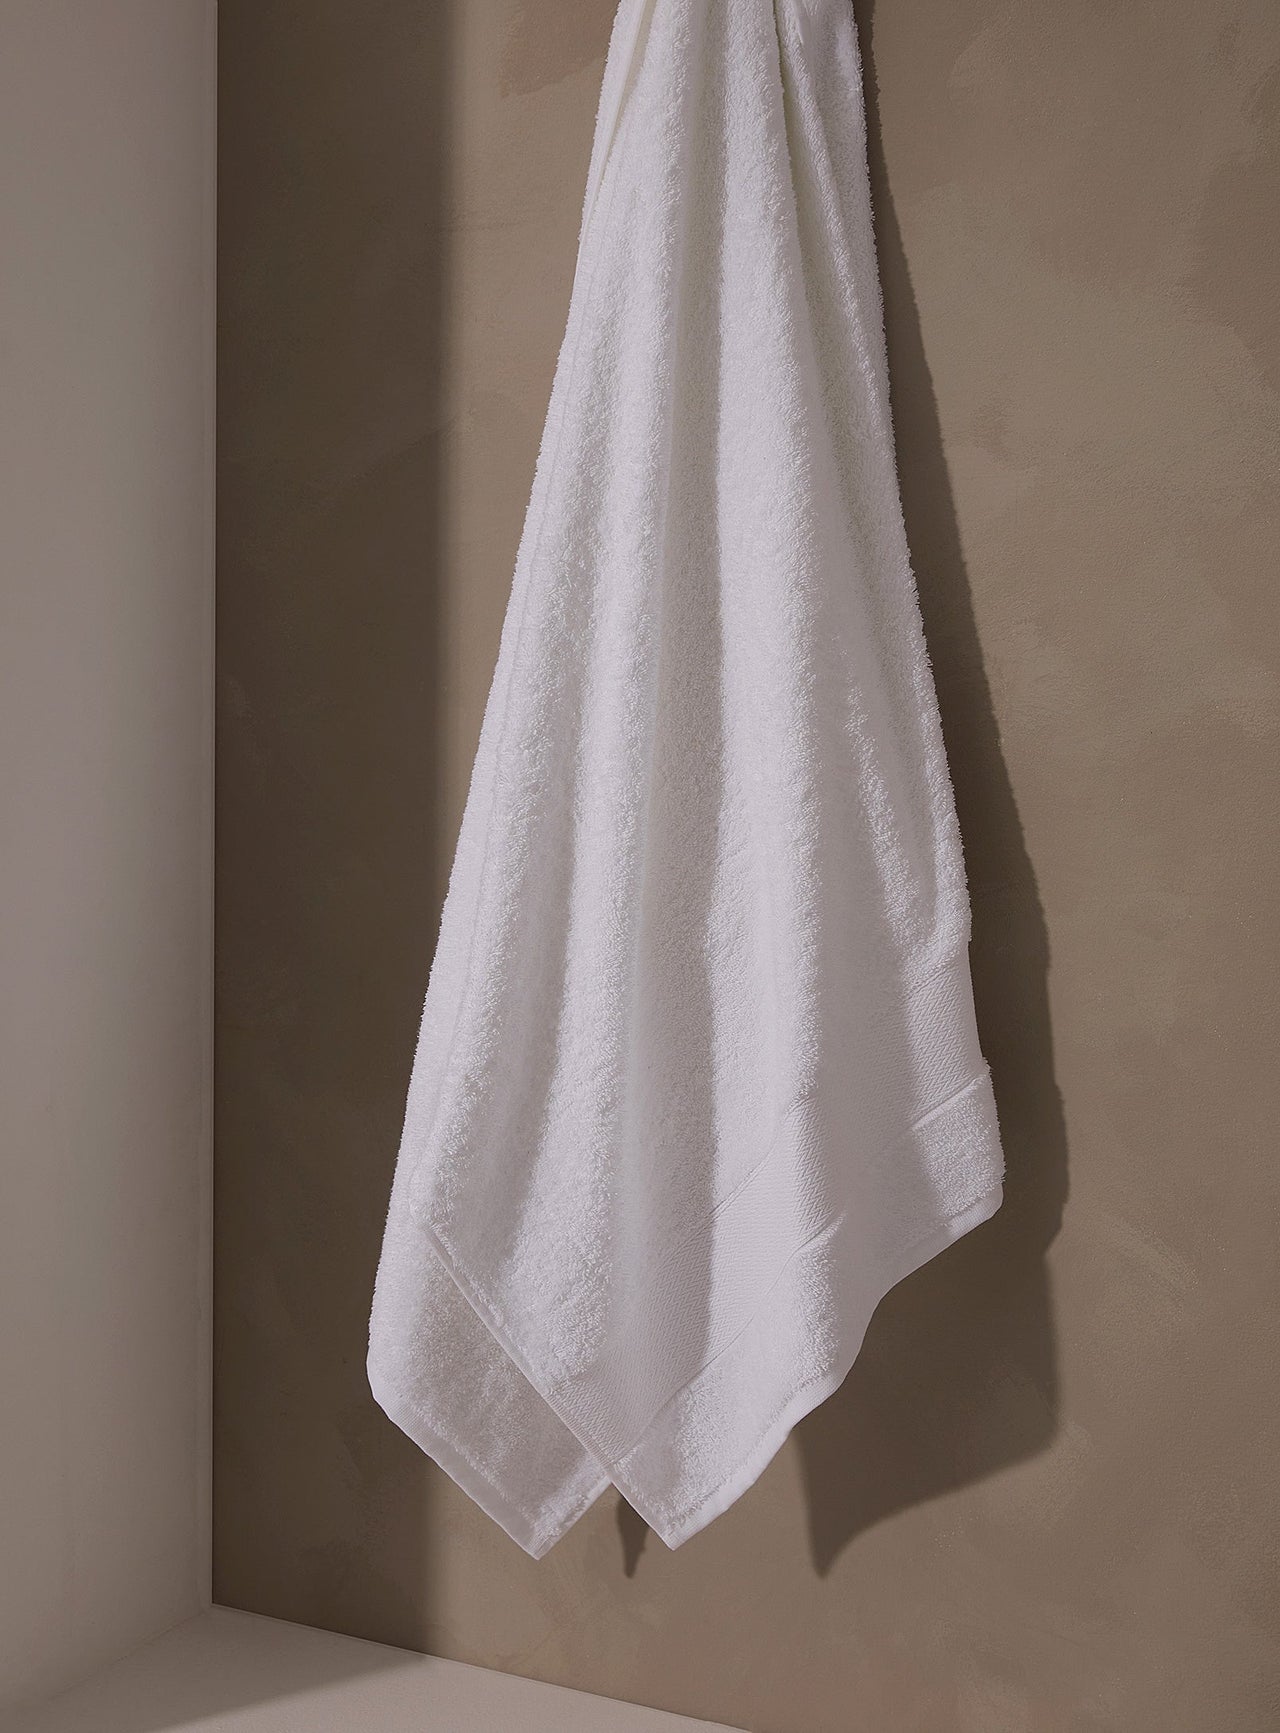 Egyptian cotton bath sheet